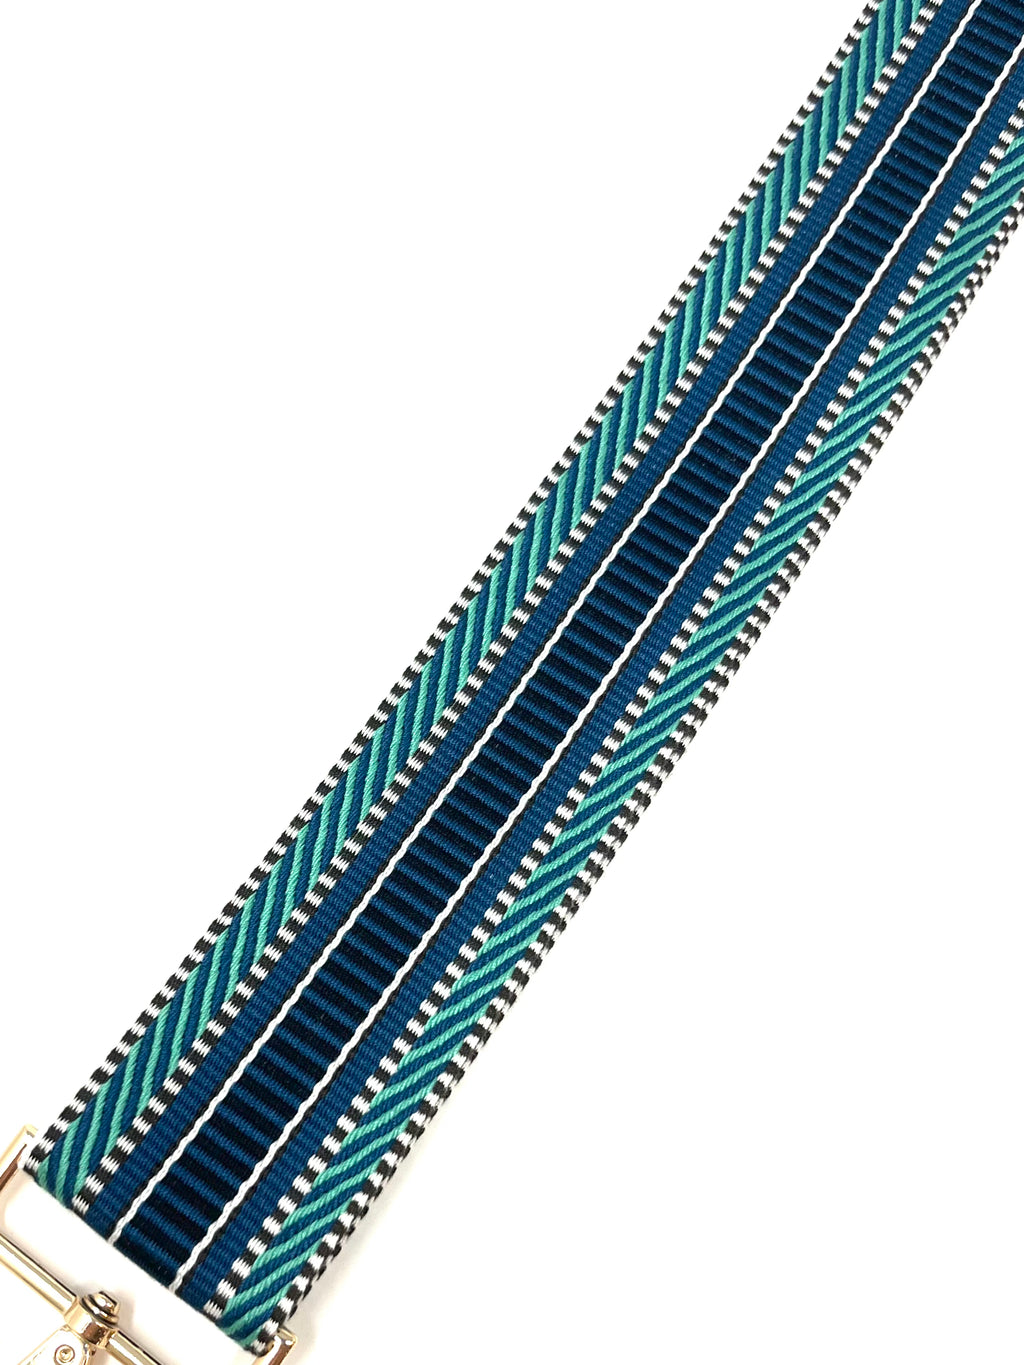 Patterned Strap in Blue